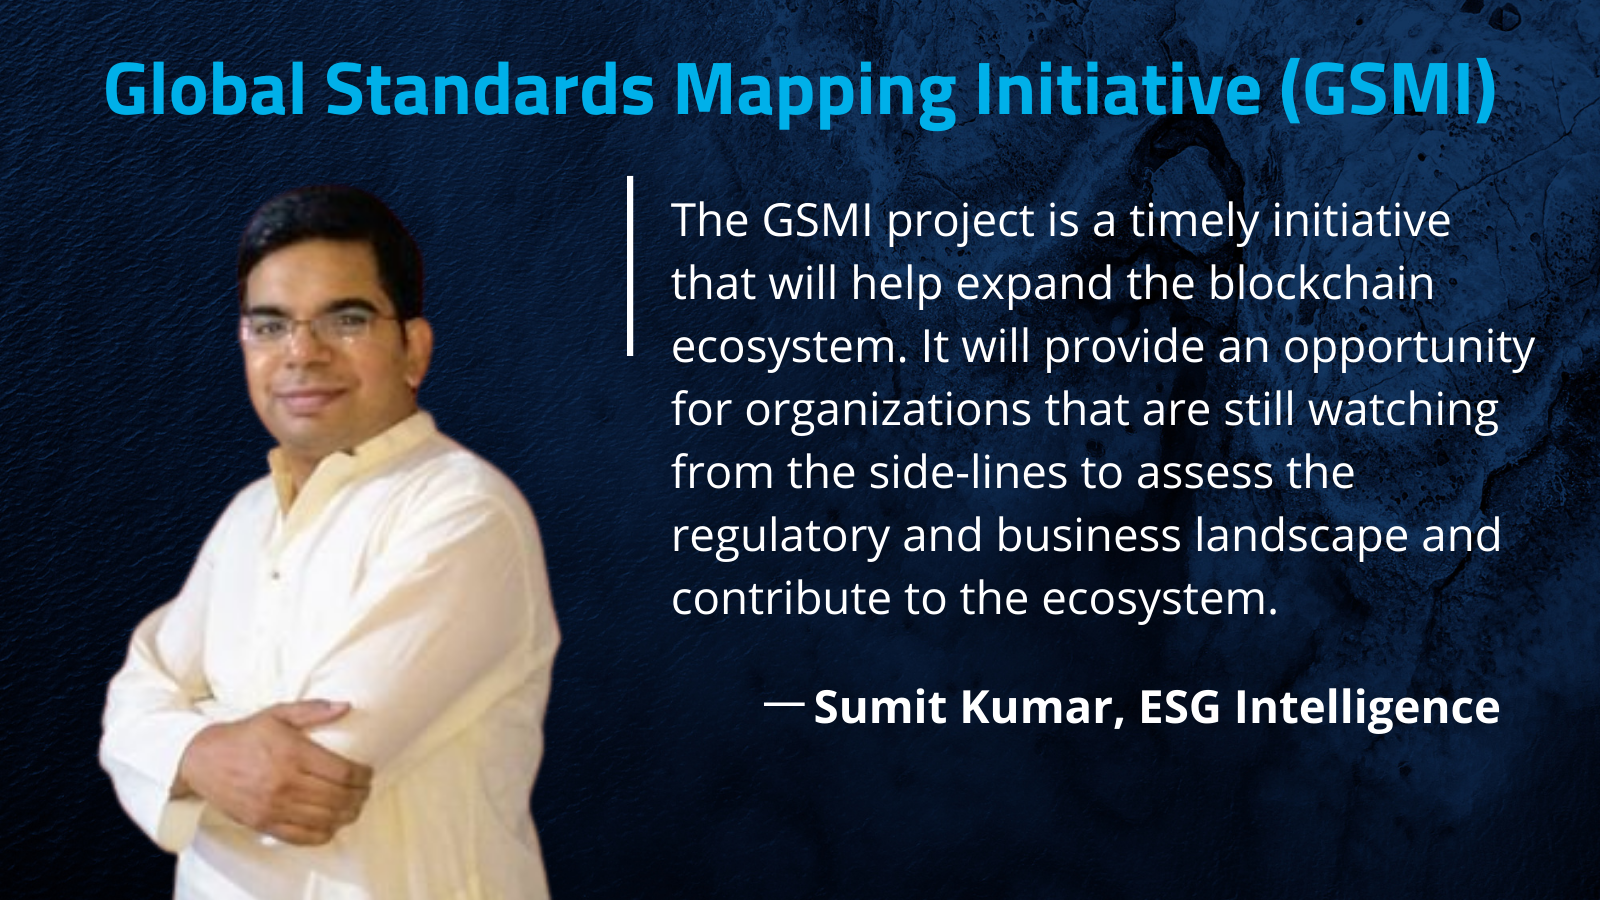 ESG Intelligence and GSMI